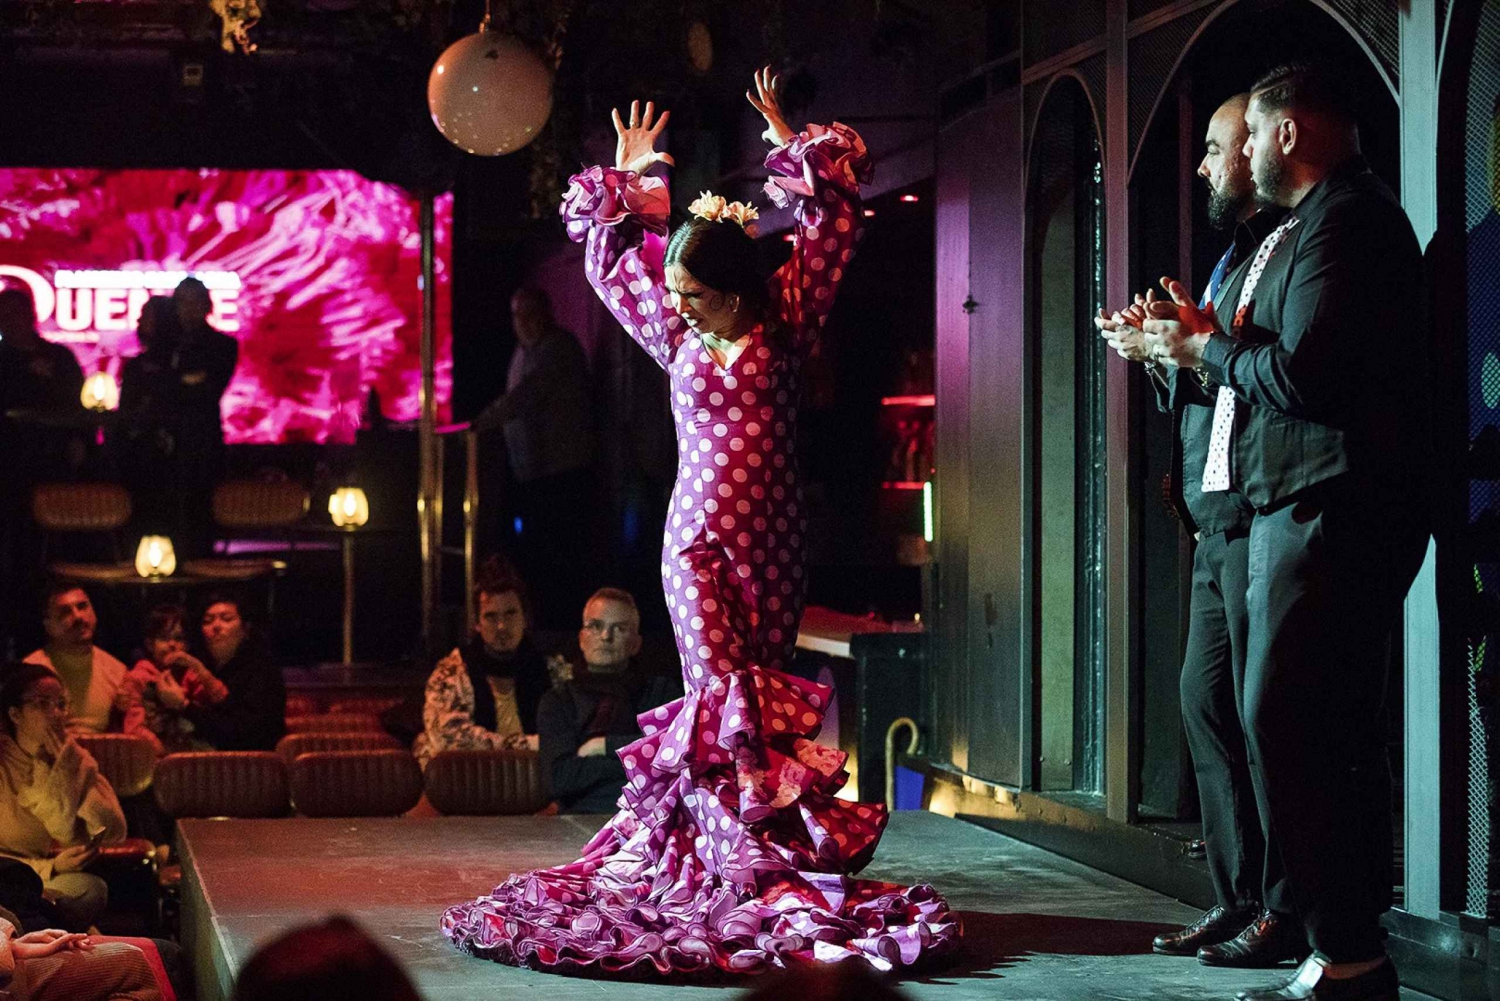 Barcelona: Flamenco-Show im El Duende